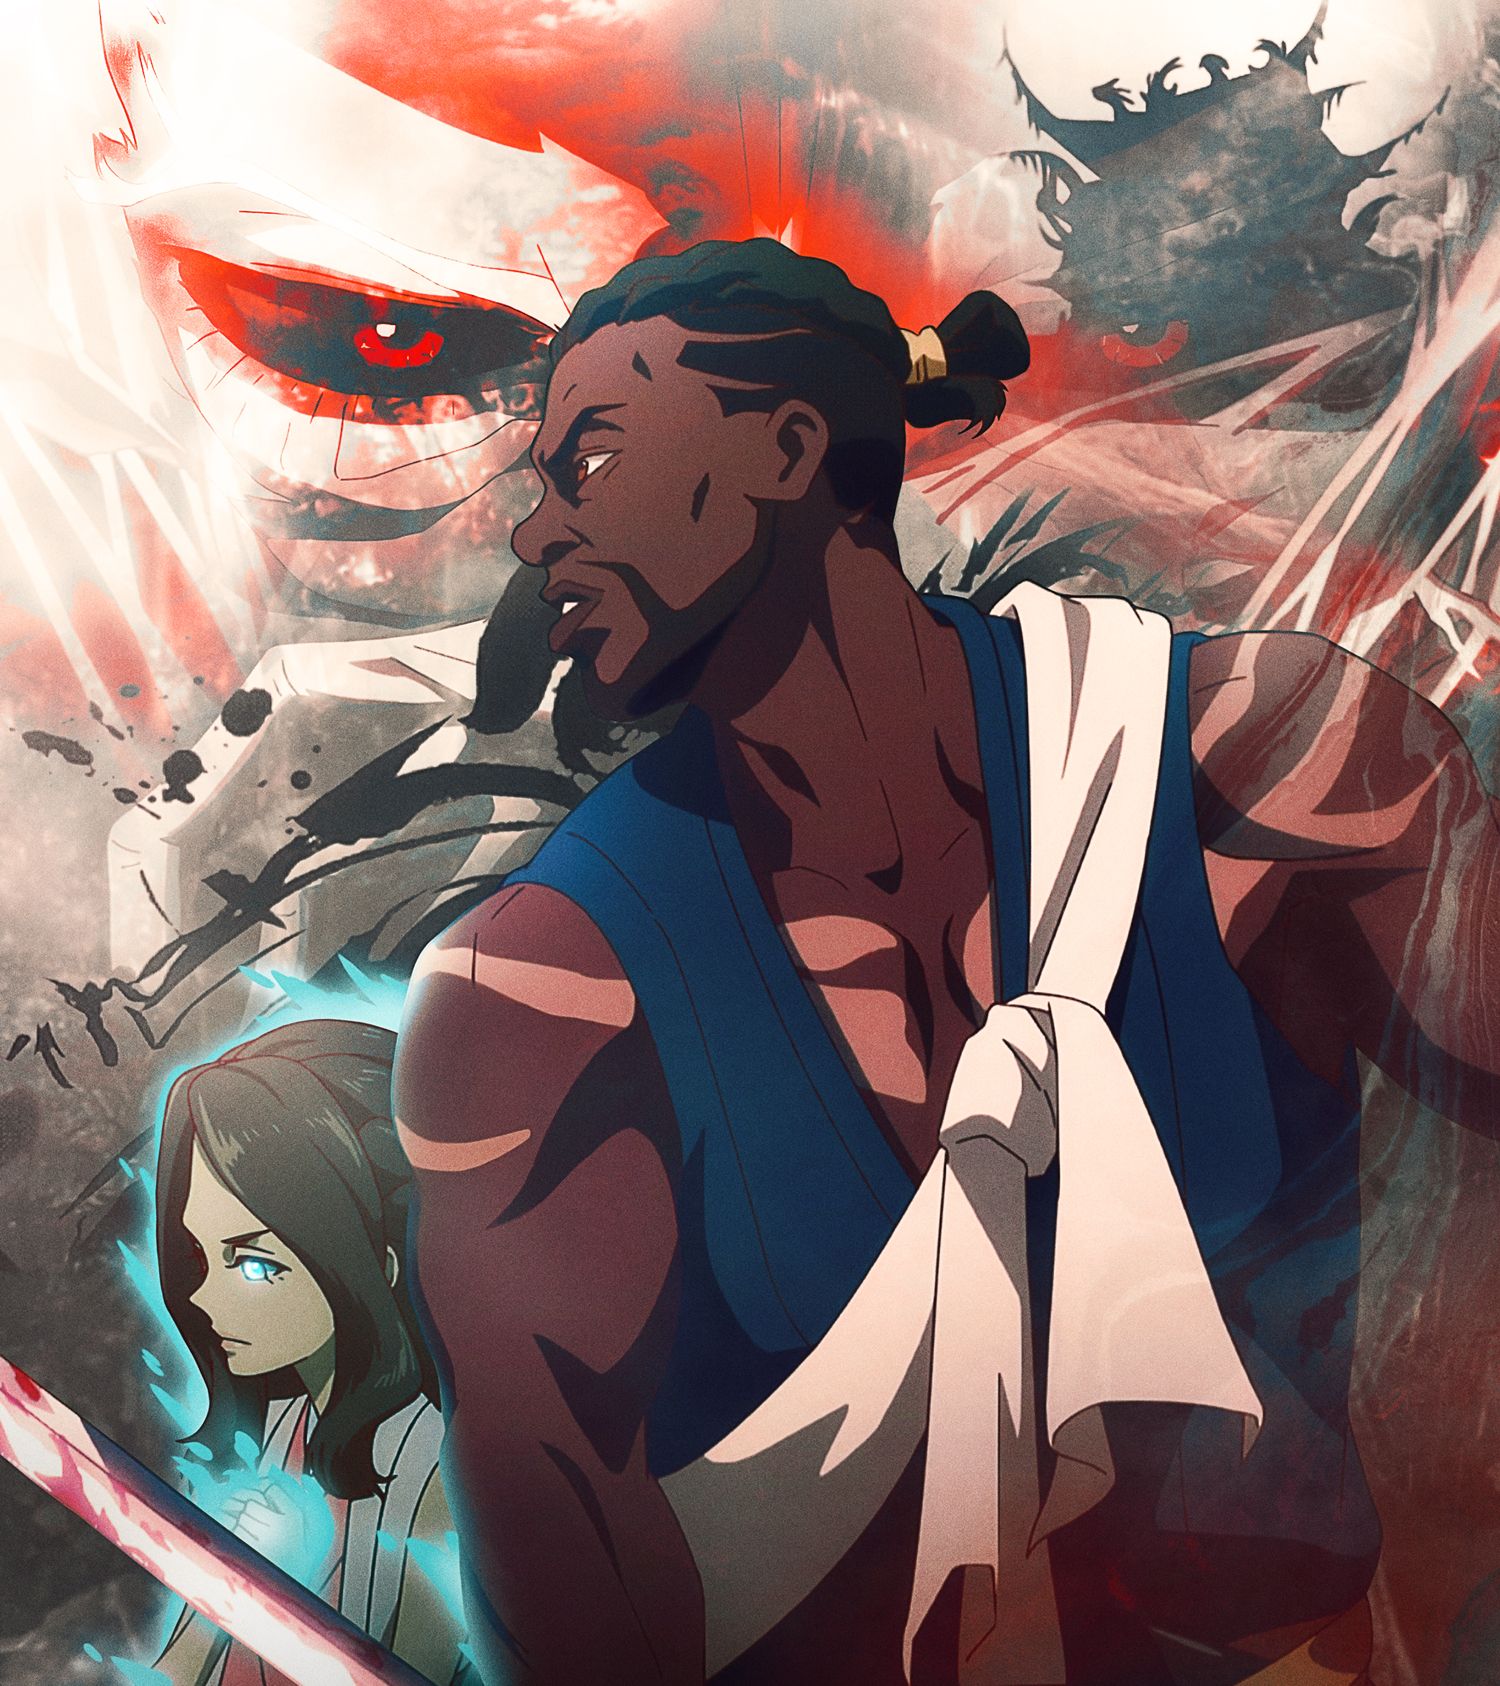 'Yasuke', anime on Black samurai under Jesuits in Japan, premieres tomorrow on Netflix